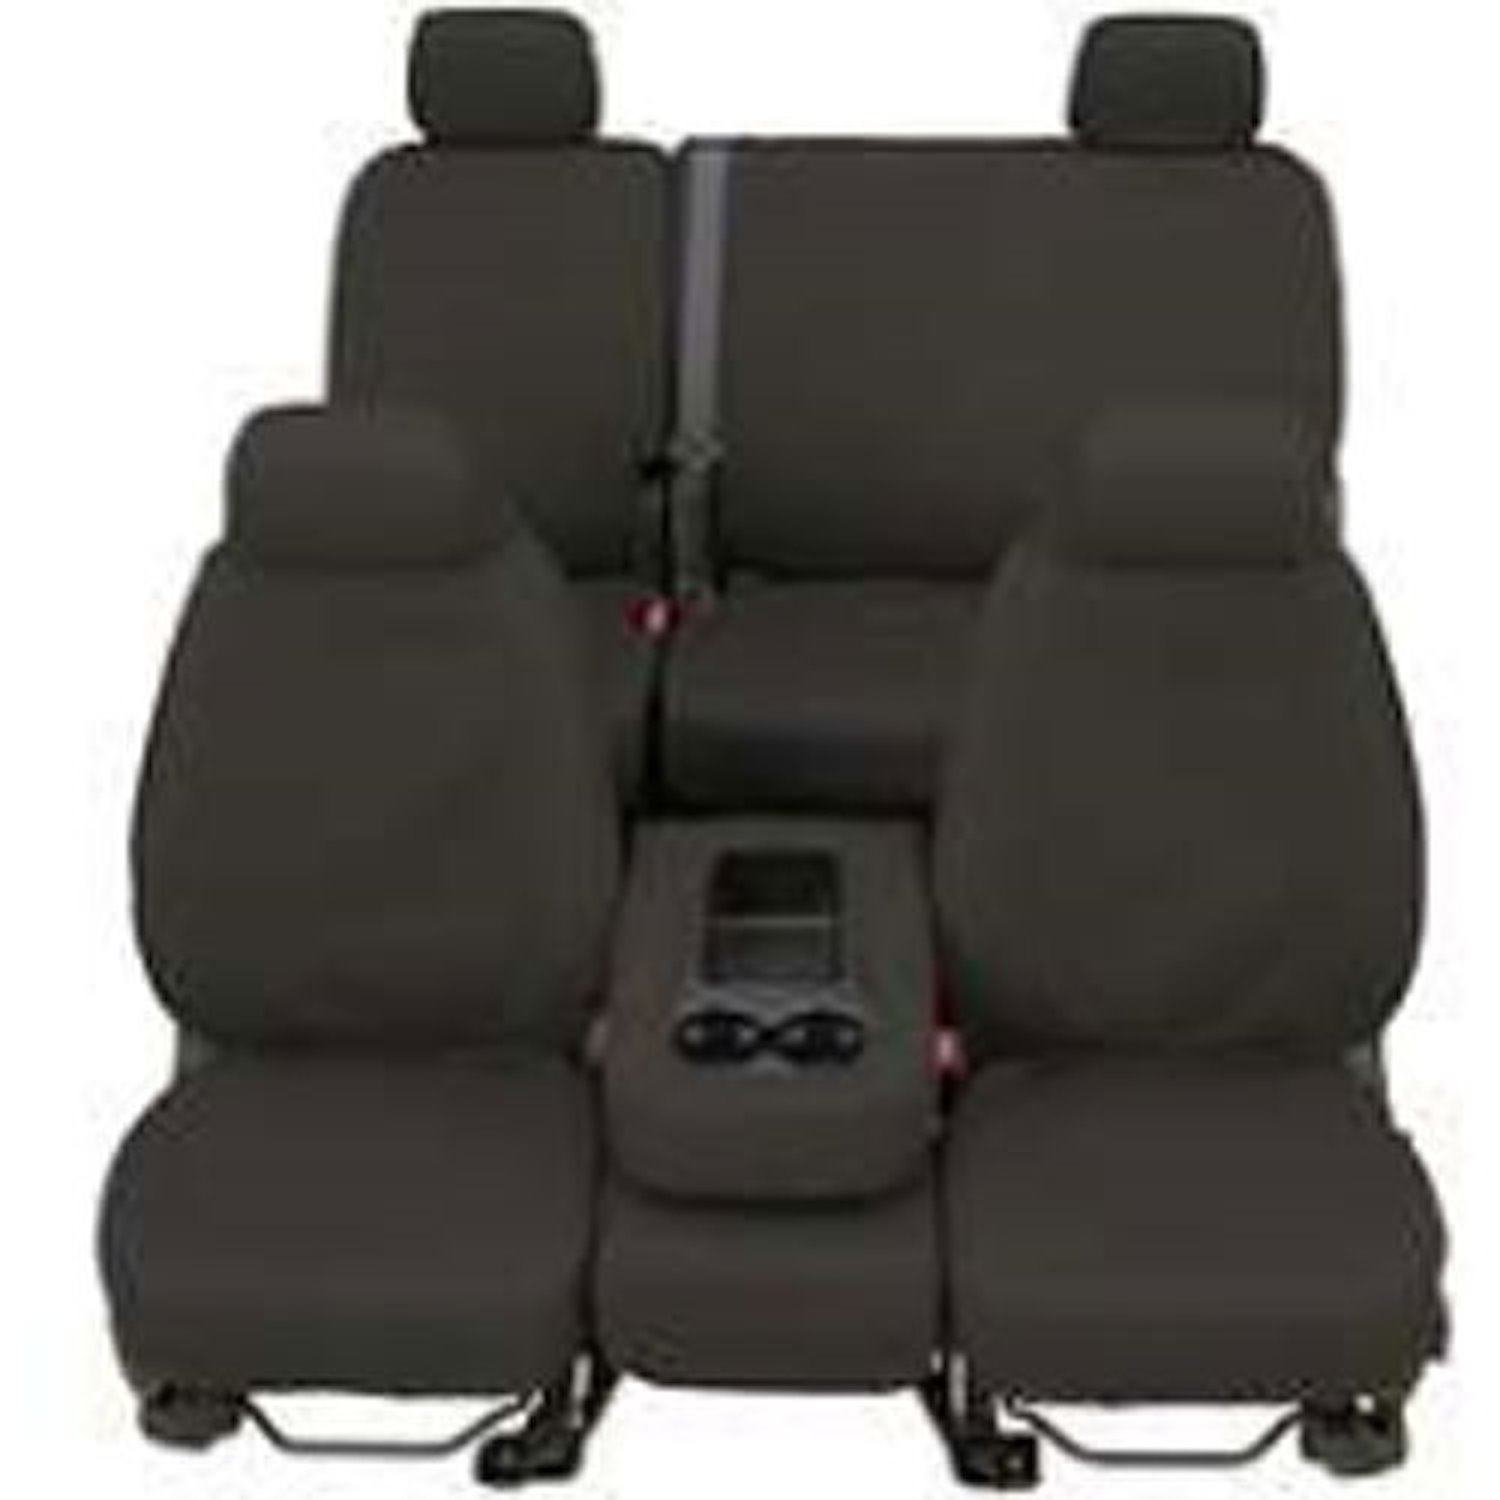 SeatSaver Seat Cover 40/20/40 Bench Seat w/Adjustable Headrest